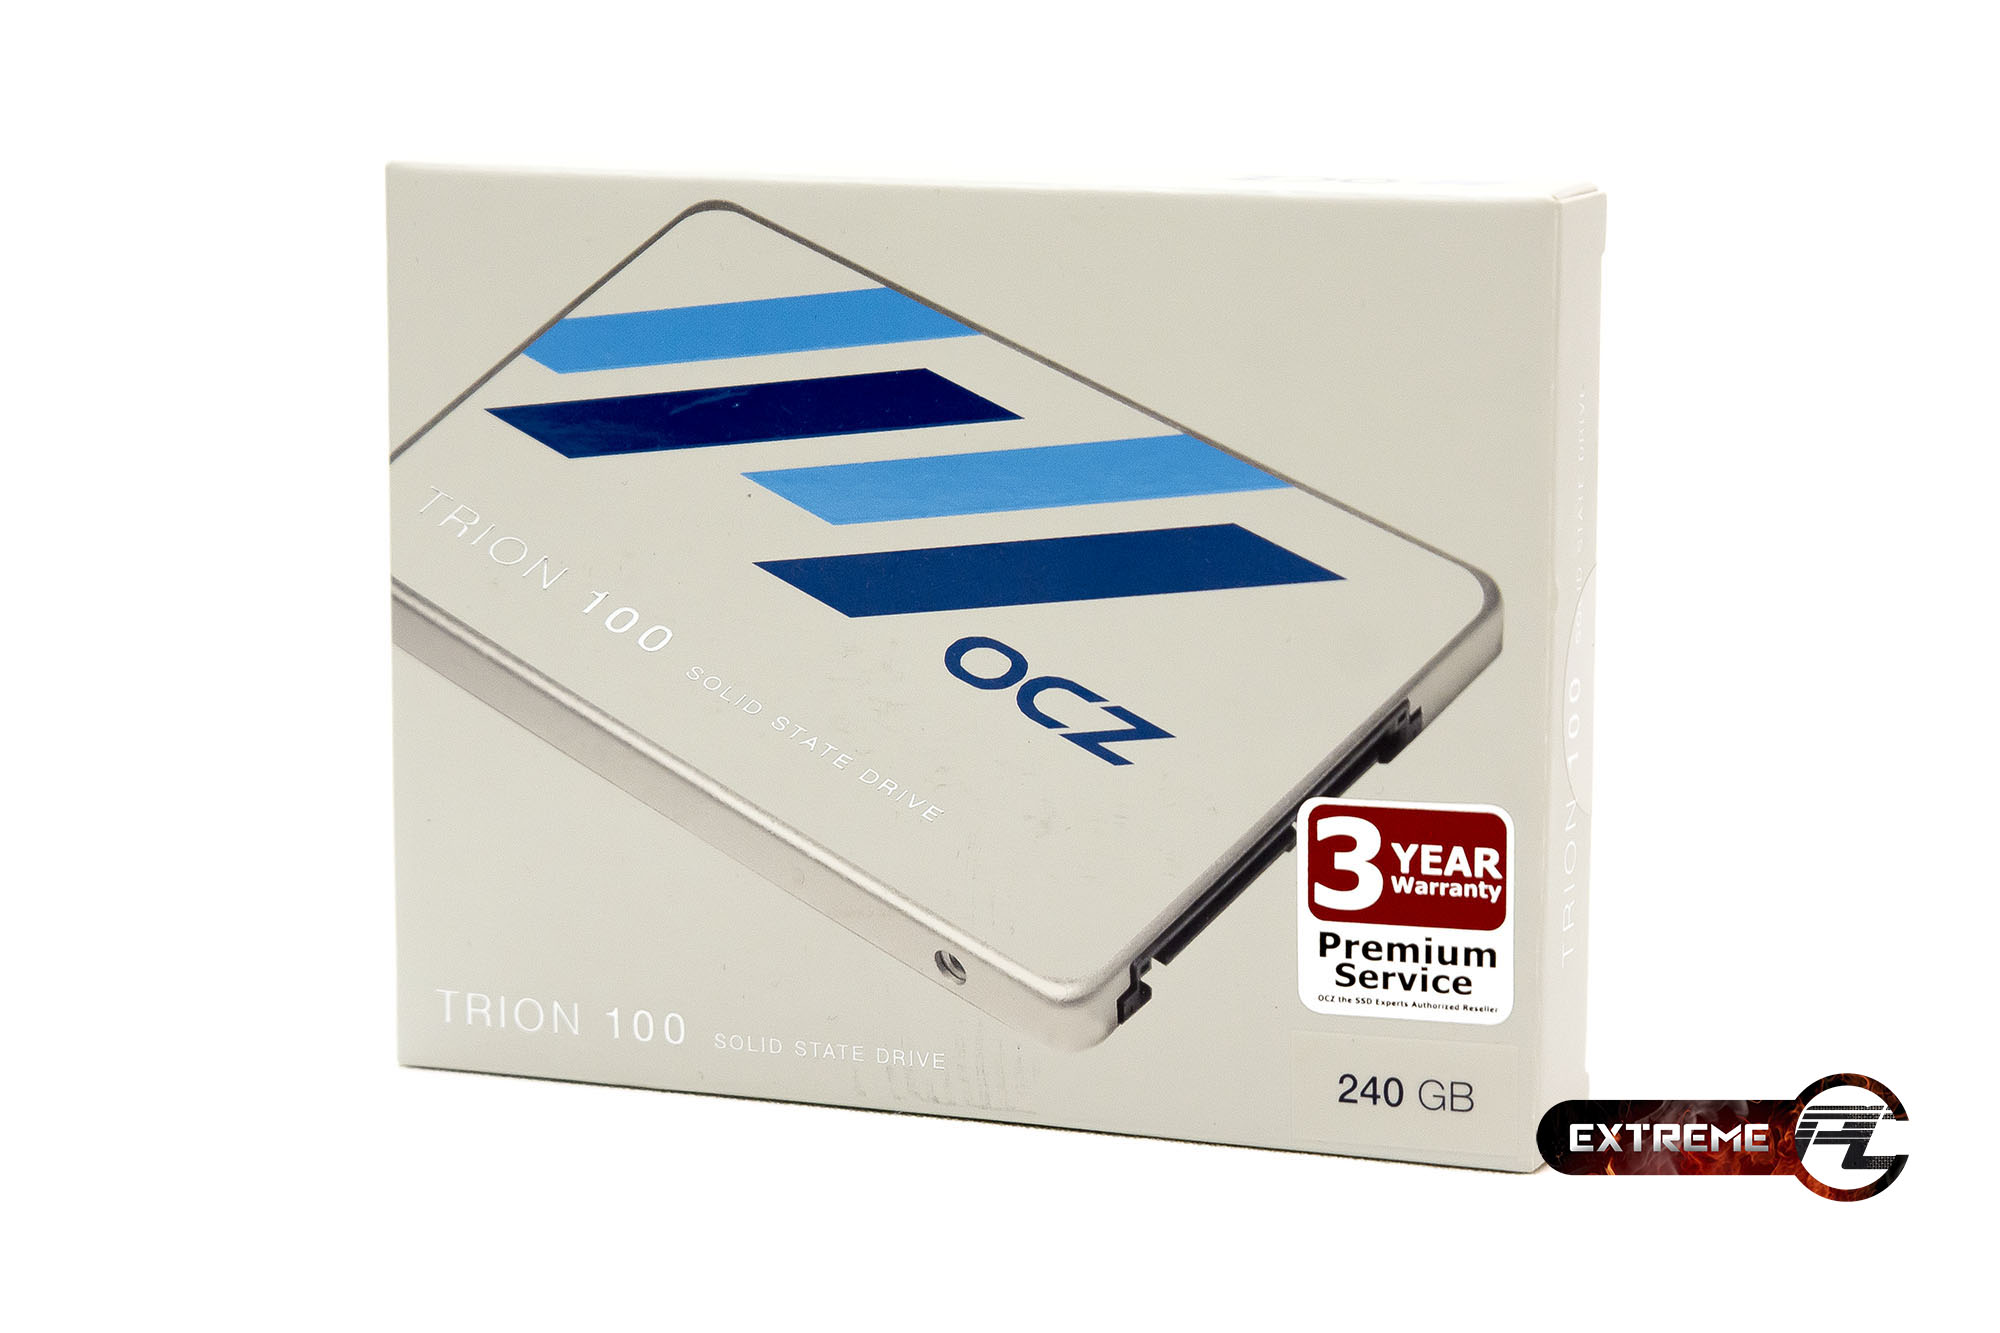 Review: OCZ TRION 100 240 GB แรงดีความเร็วไม่ตก